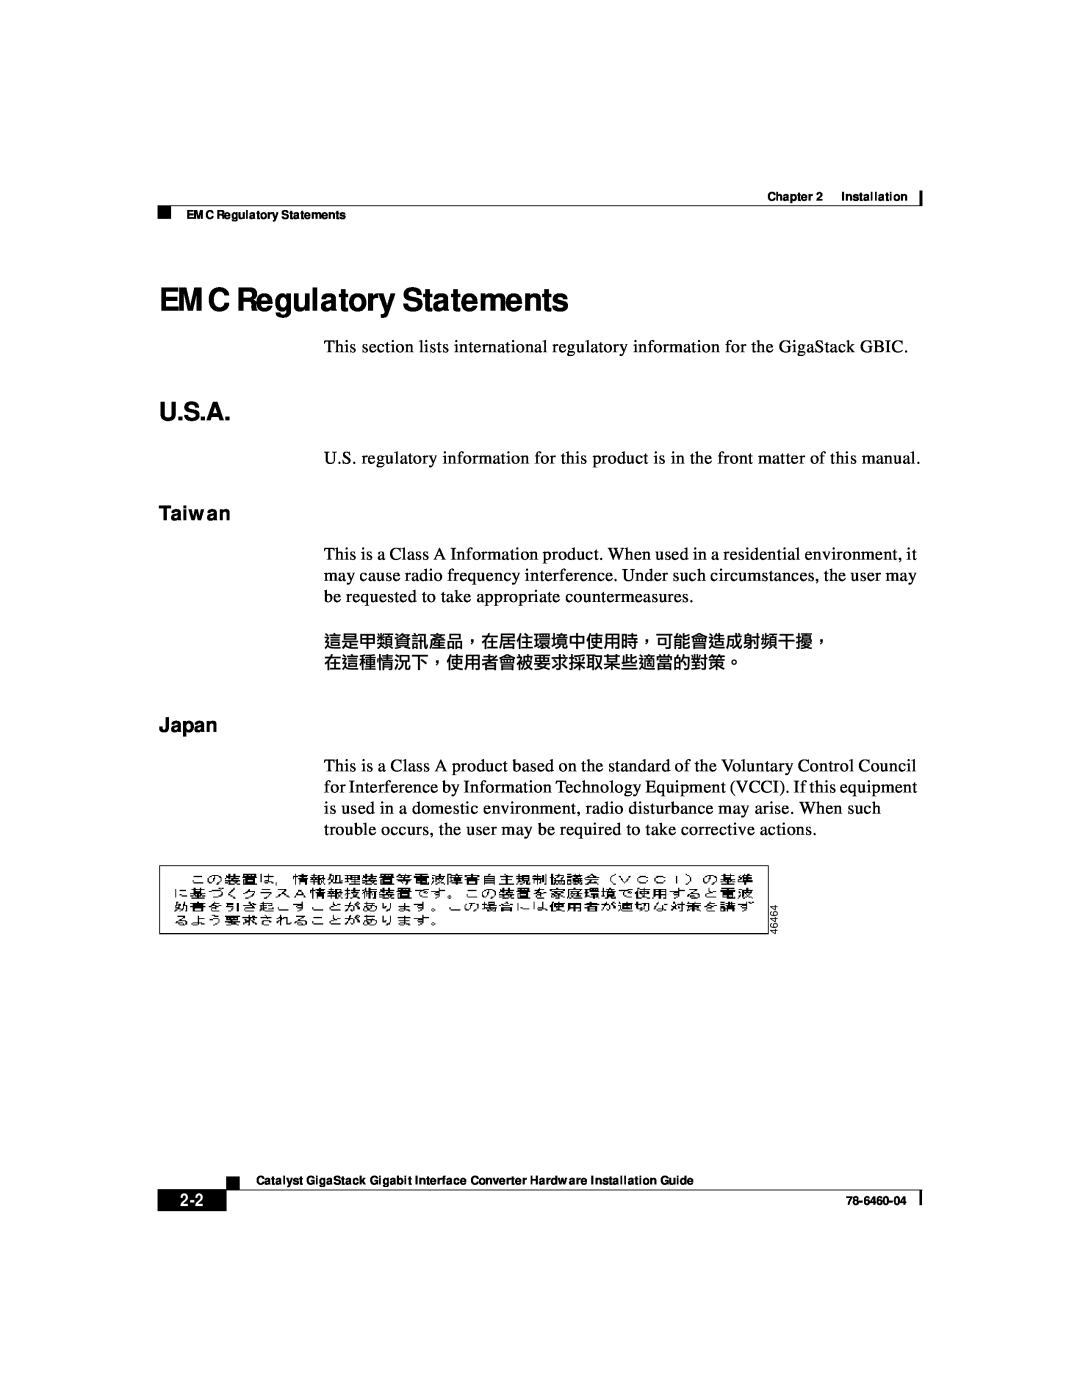 Cisco Systems WS-X3500-XL manual EMC Regulatory Statements, U.S.A, Taiwan, Japan 